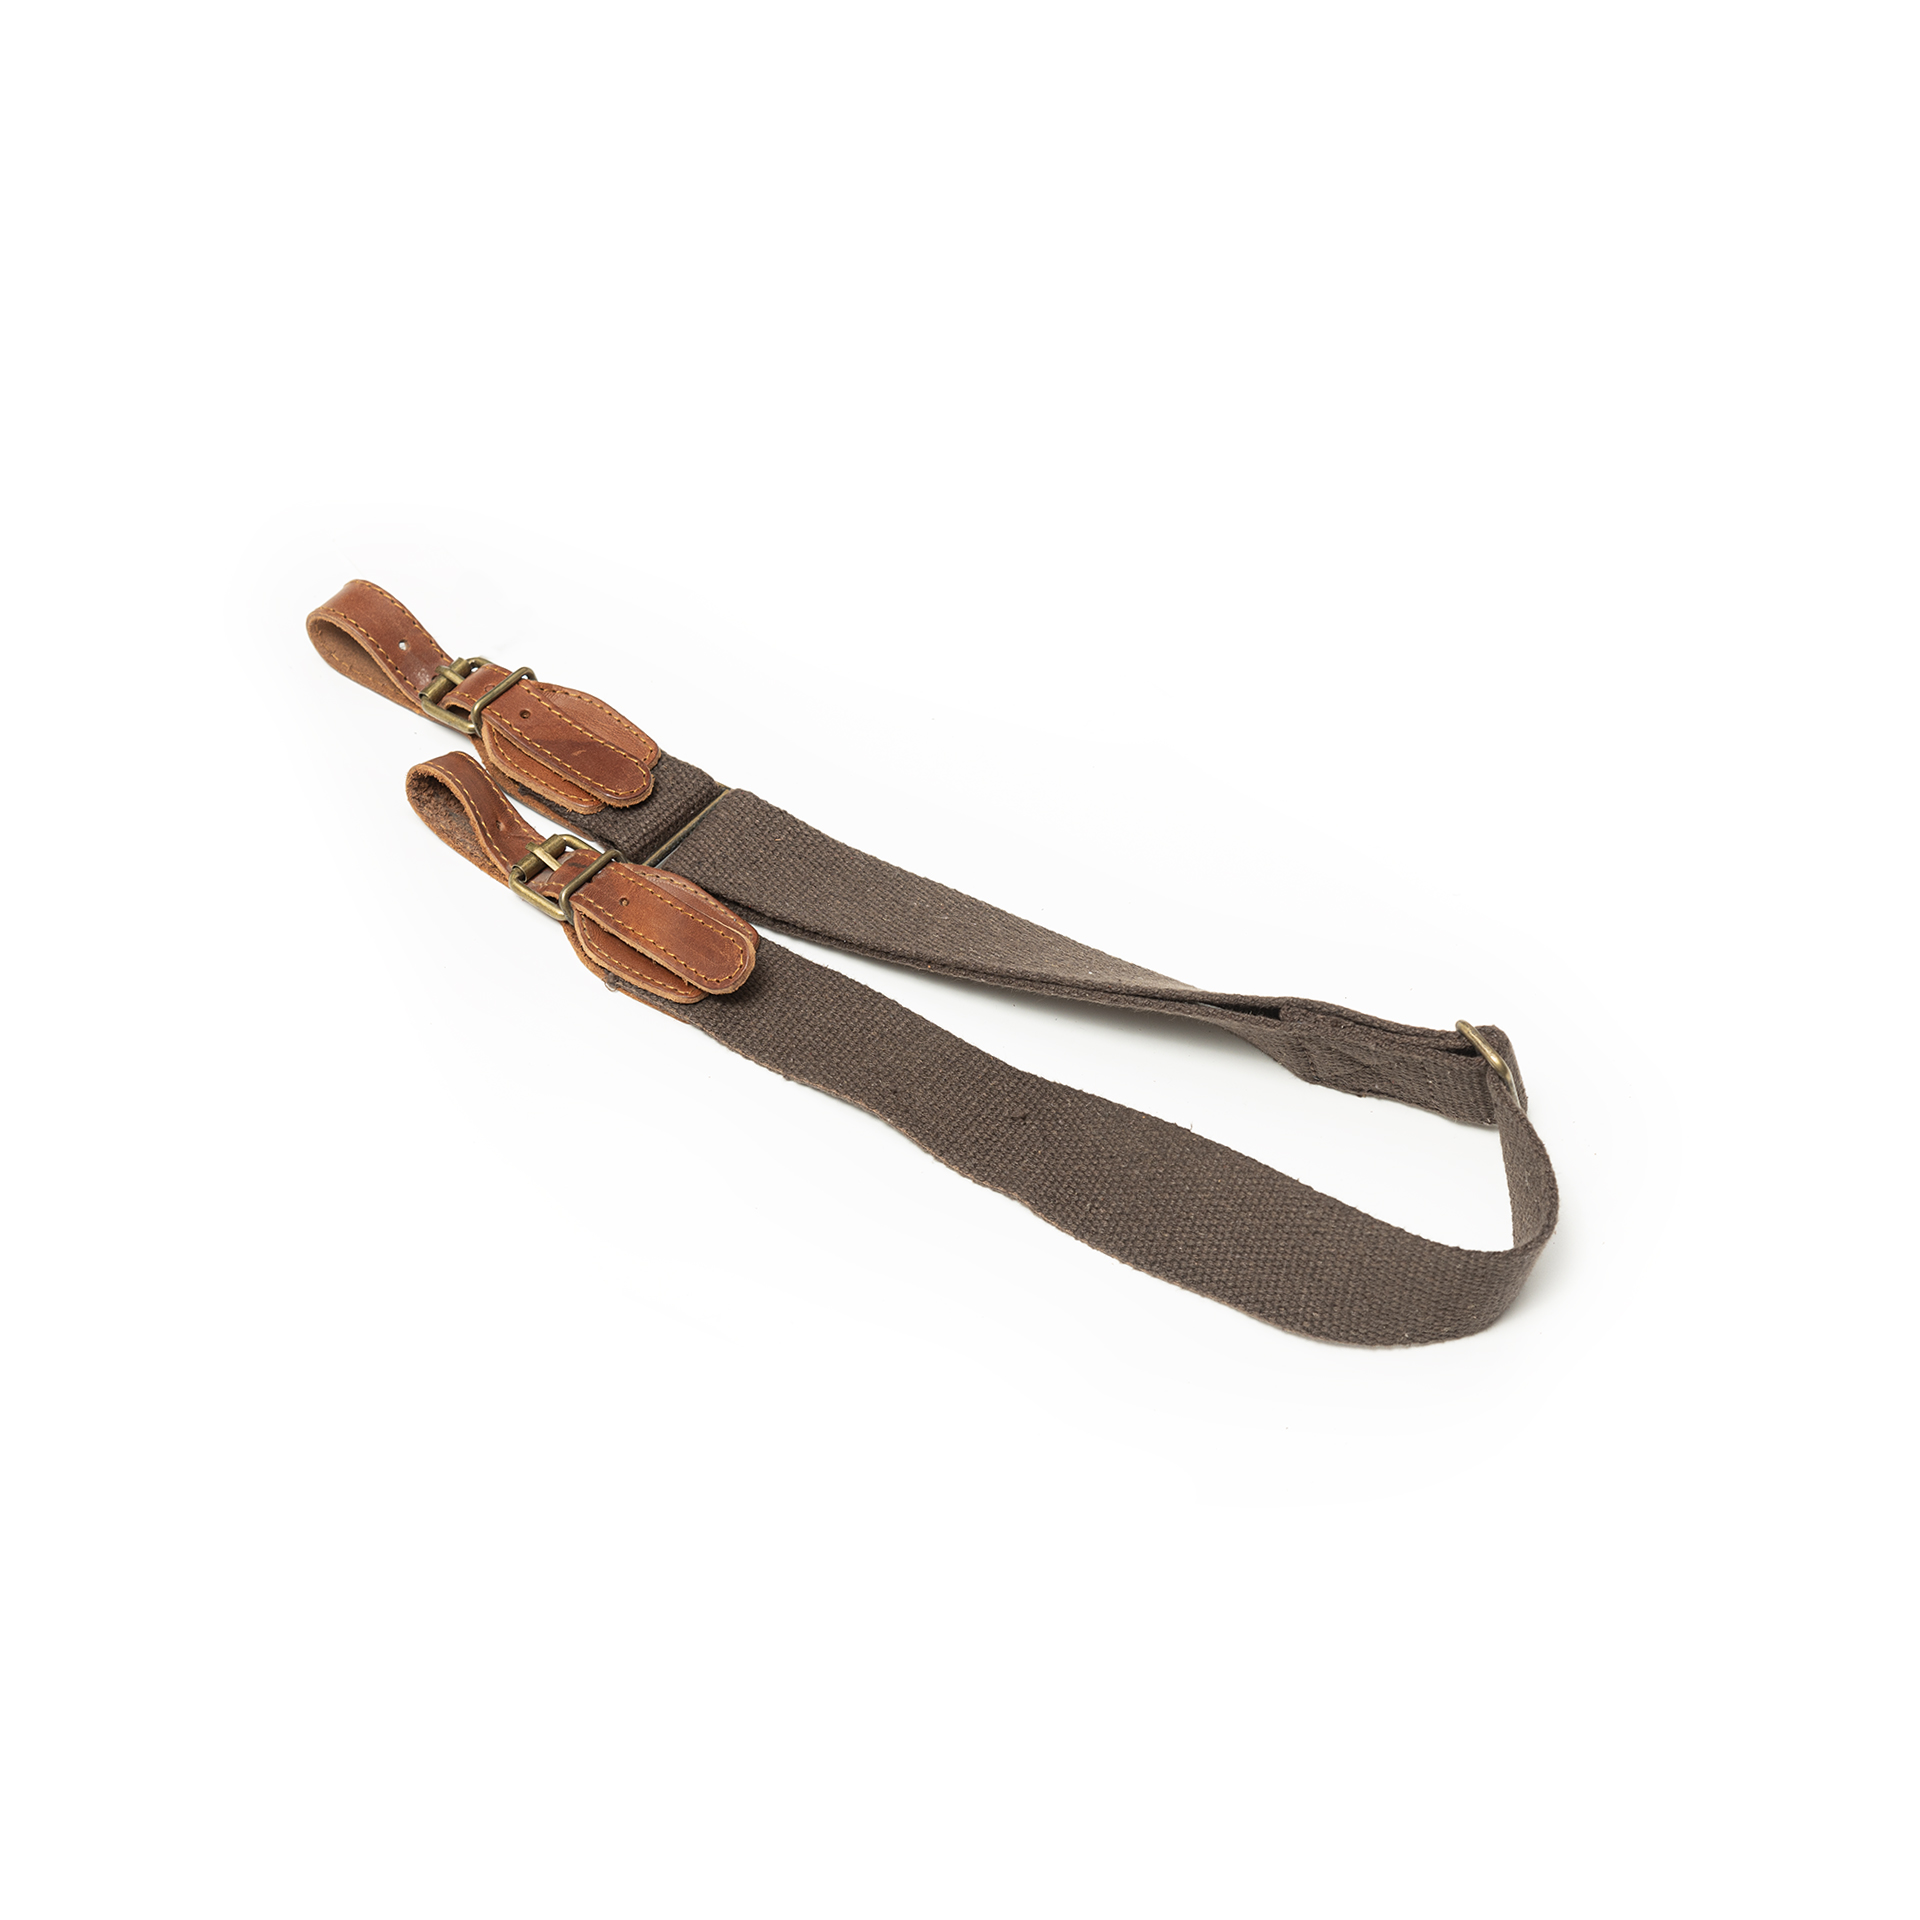 Adjustable cotton rifle belt – 32225-11